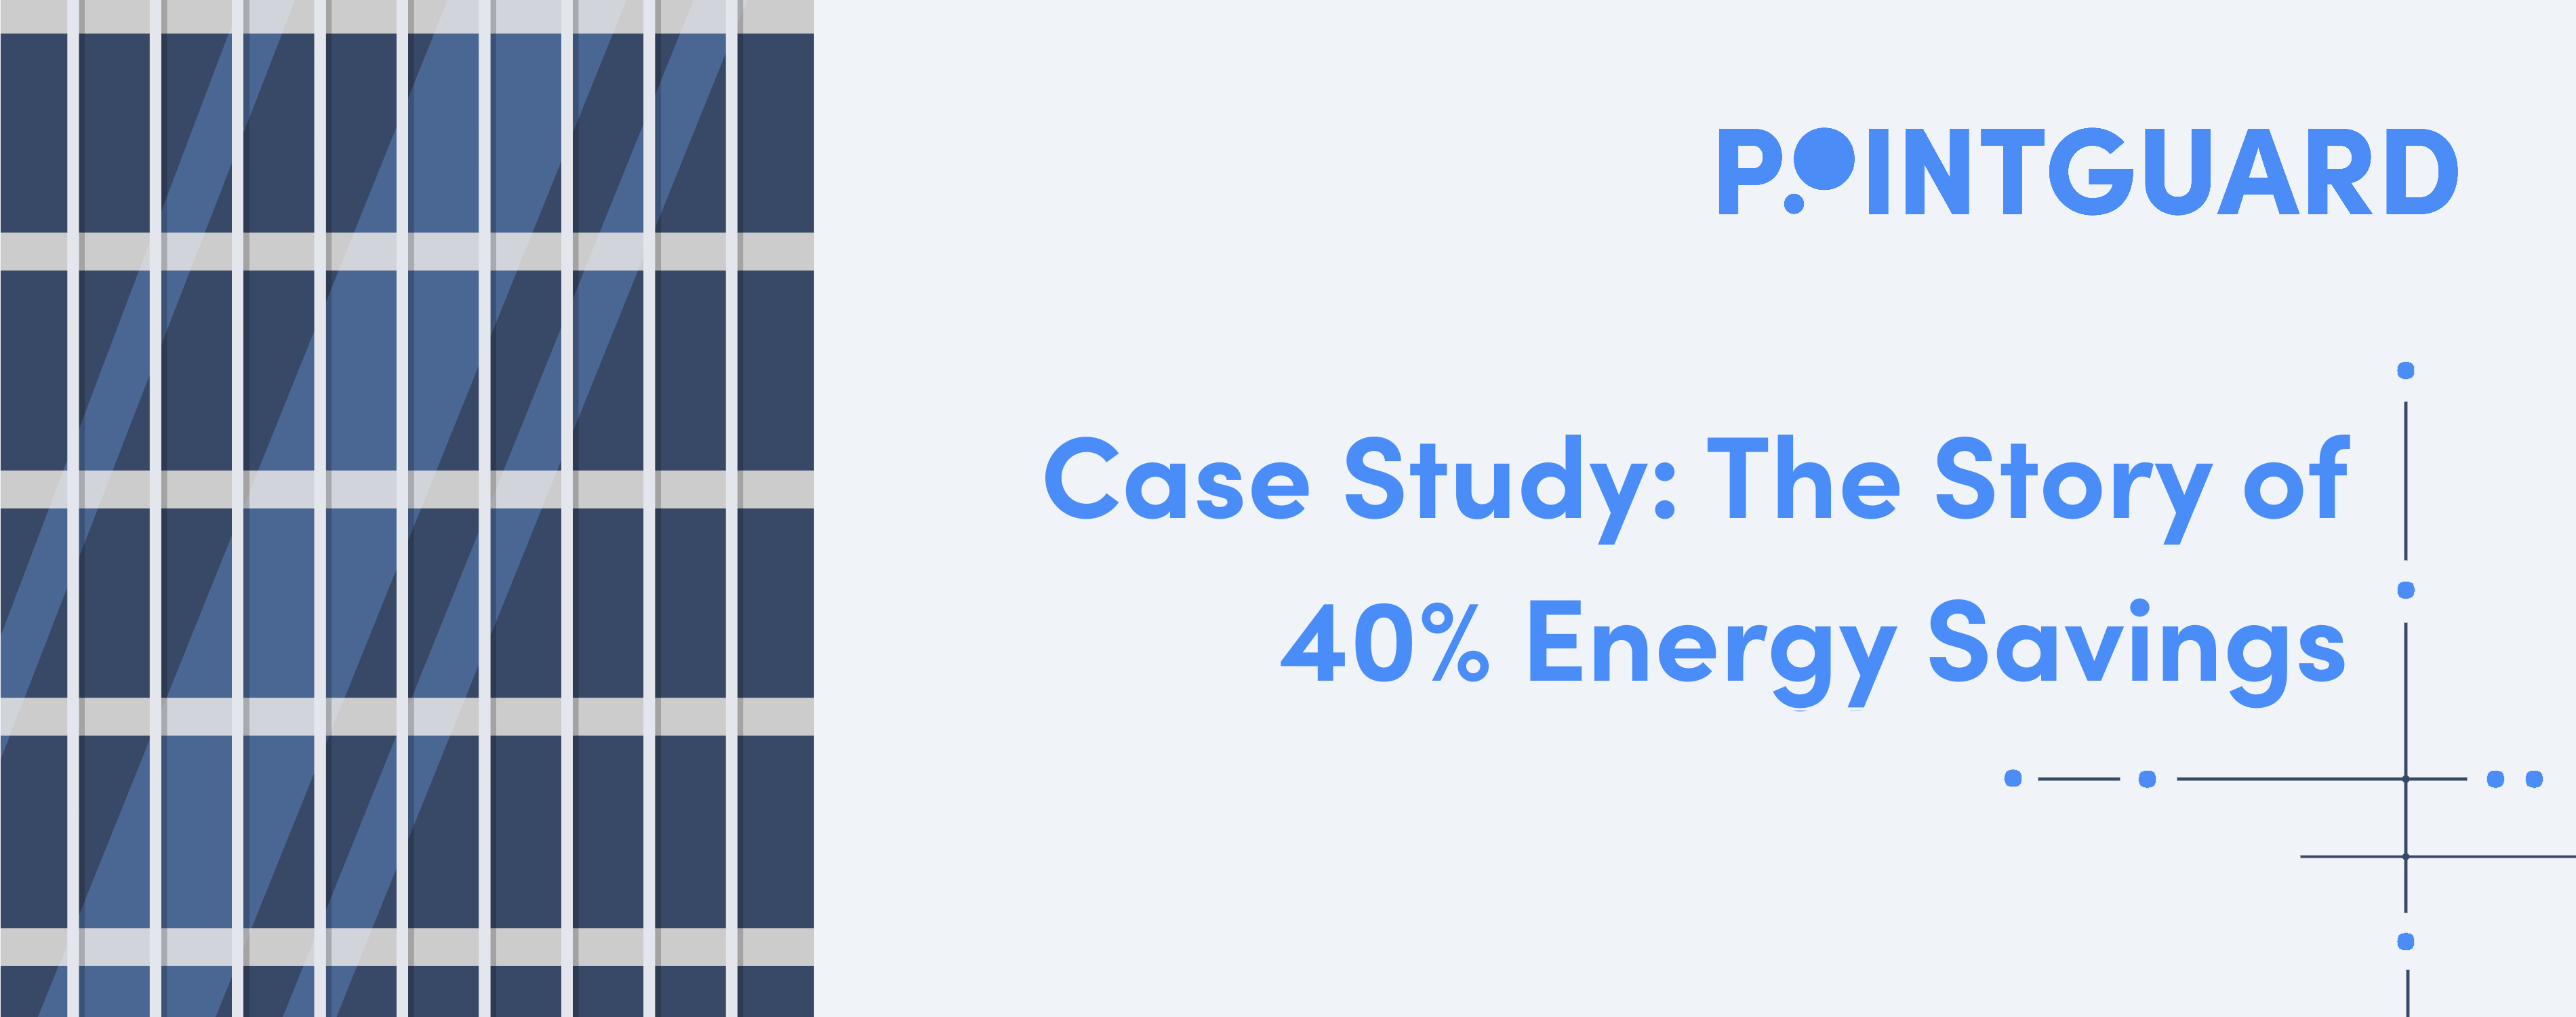 PointGuard Case Study: The Story of 40% Energy Savings